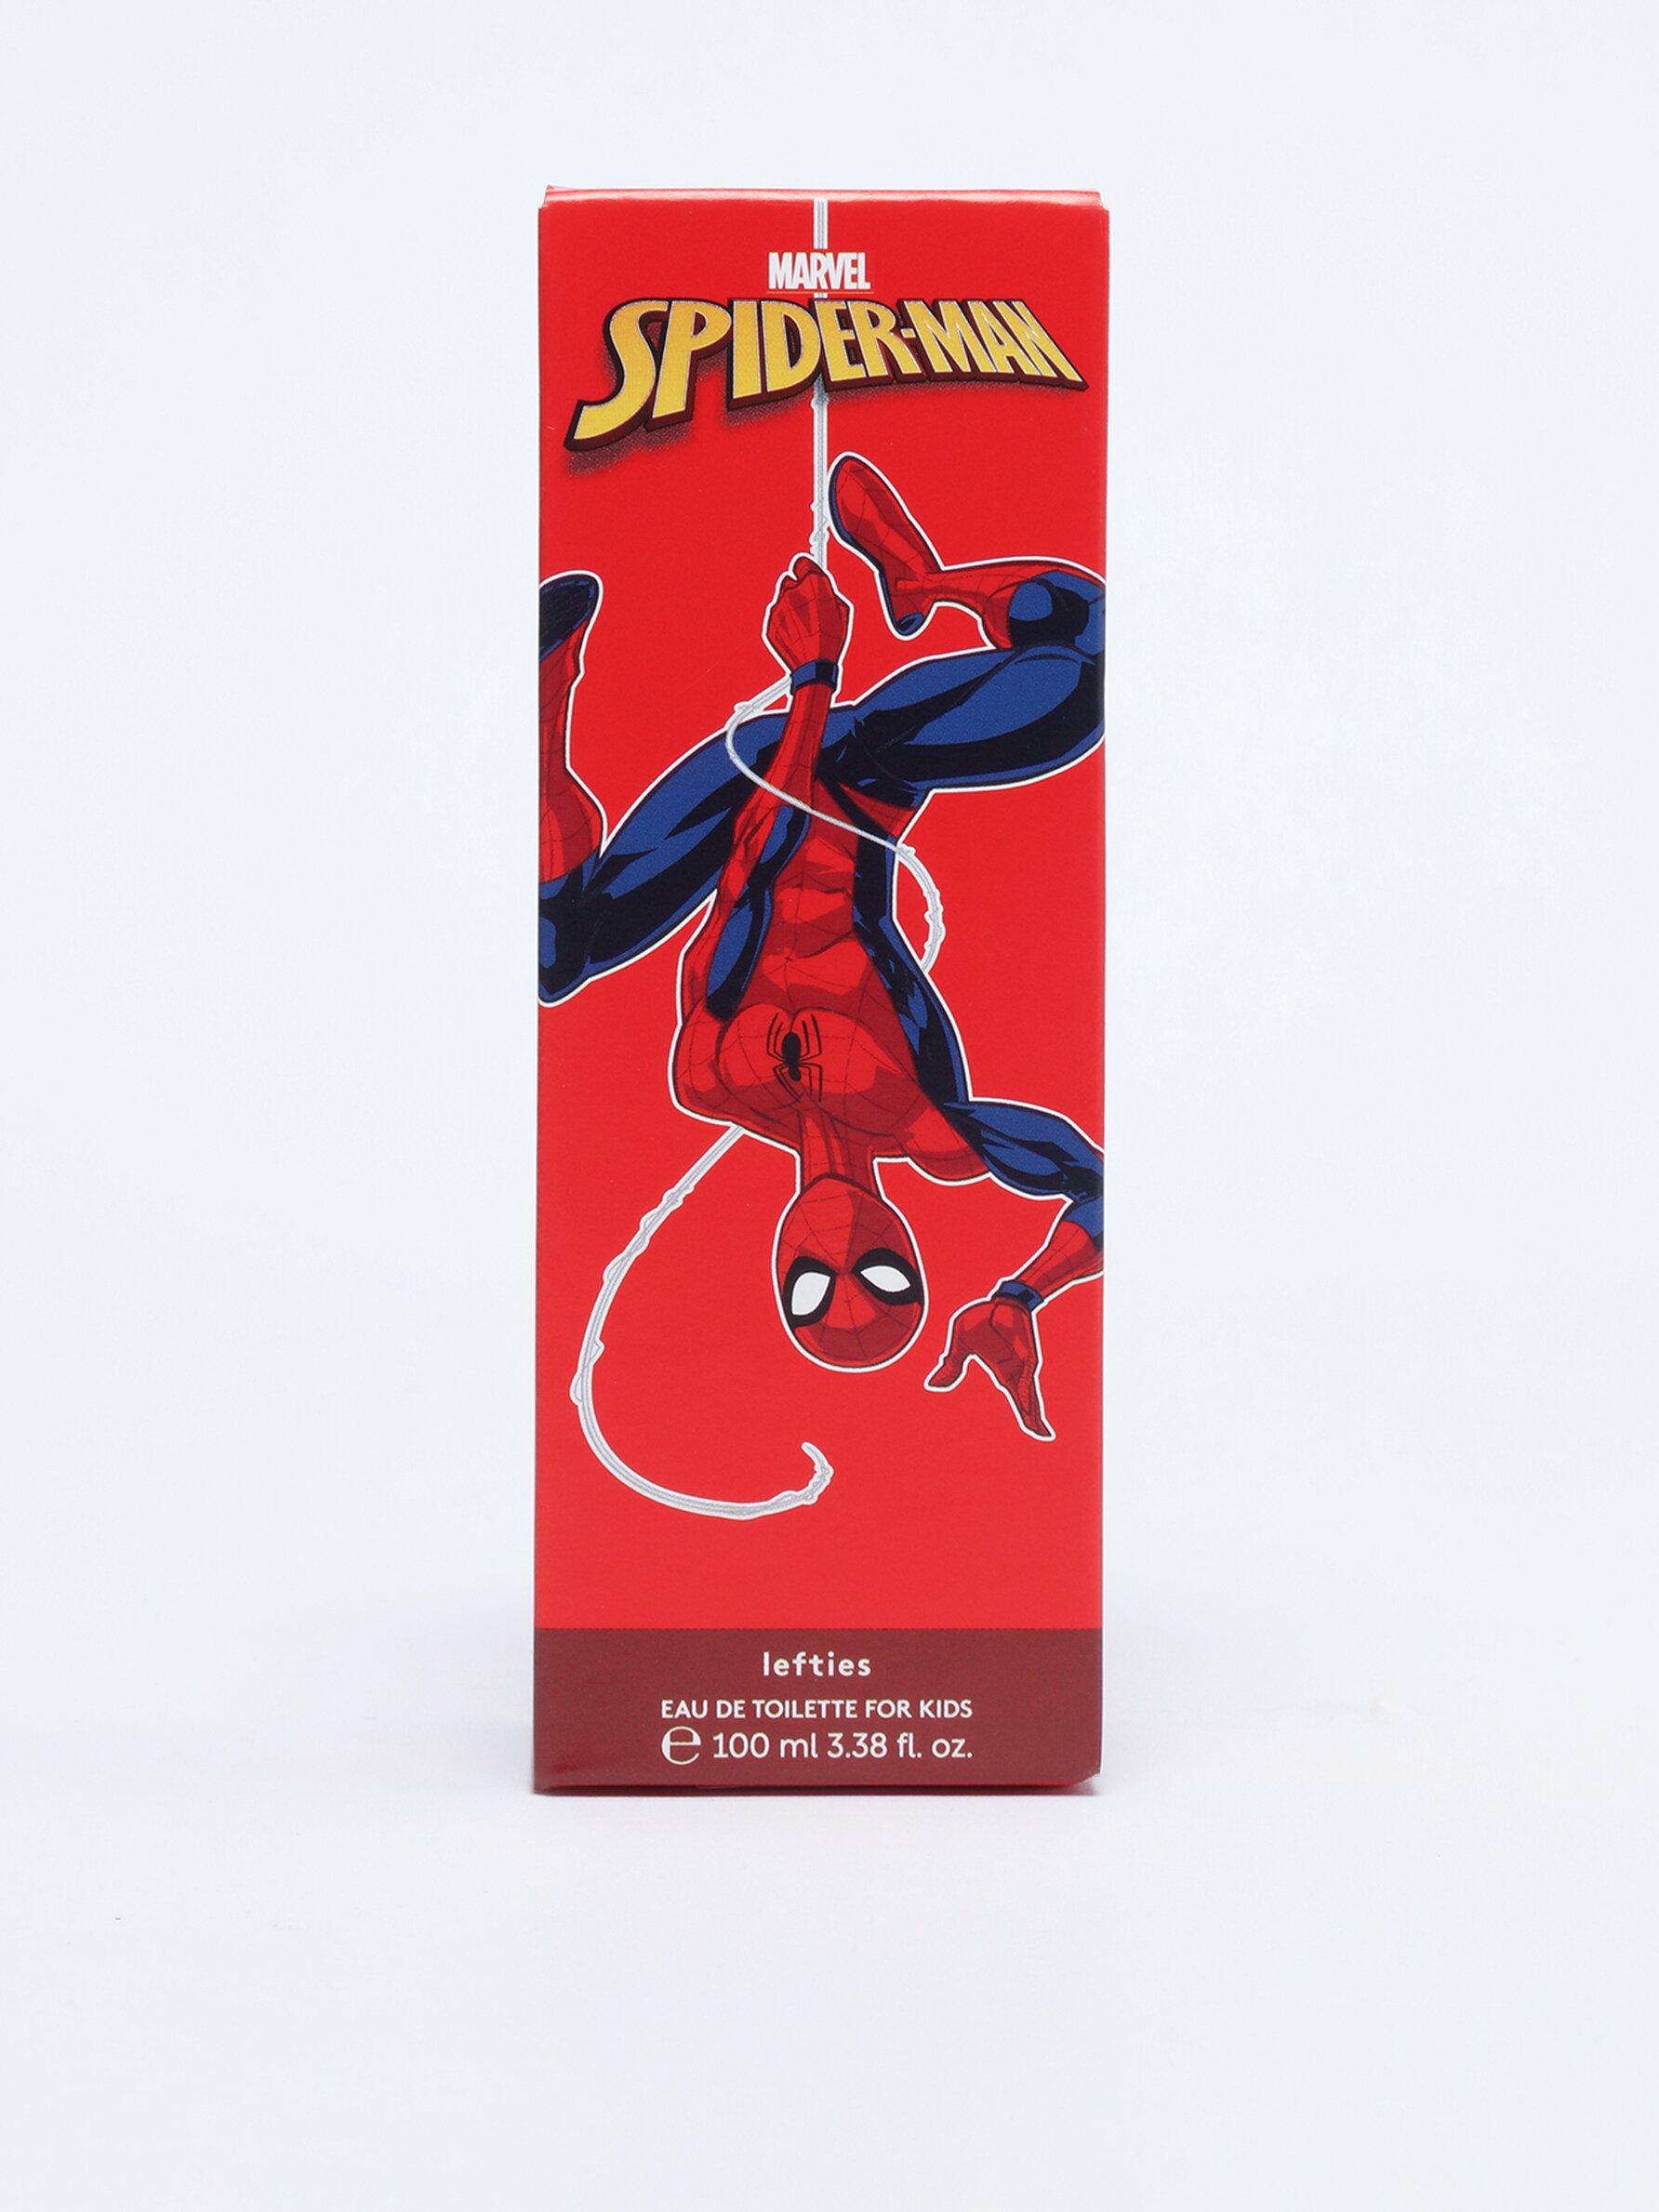 Spiderman ©Marvel children's 100 ml eau de toilette - ACCESSORIES - Boy -  Kids 